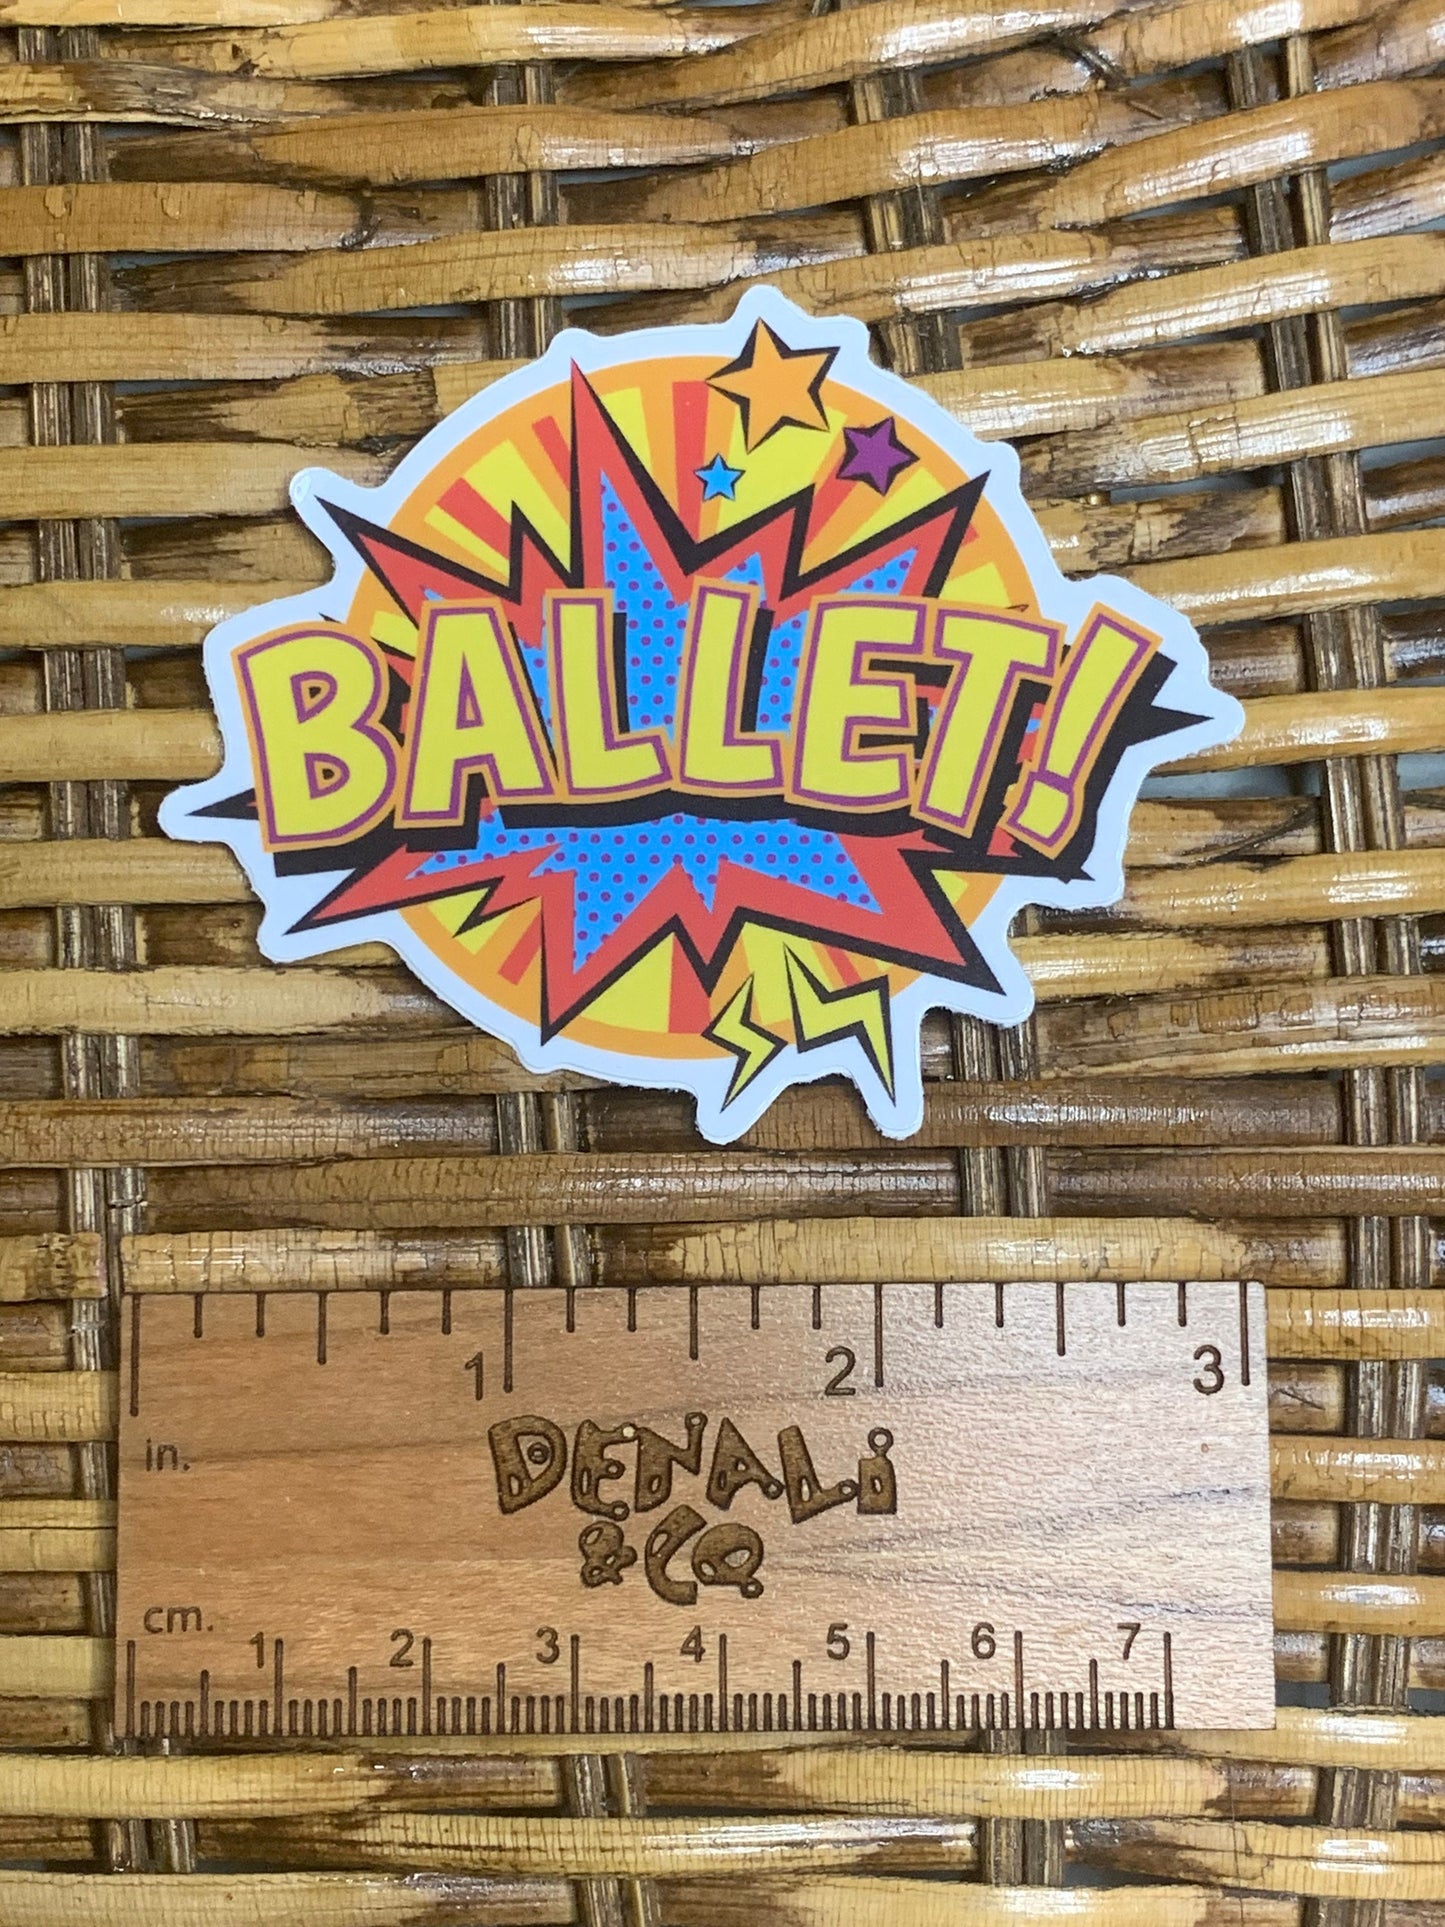 Comic Strip Ballet! Vinyl Sticker, Vinyl Decal, Laptop Sticker, Dance Sticker, Gifts For Dancers, Ballet Gift